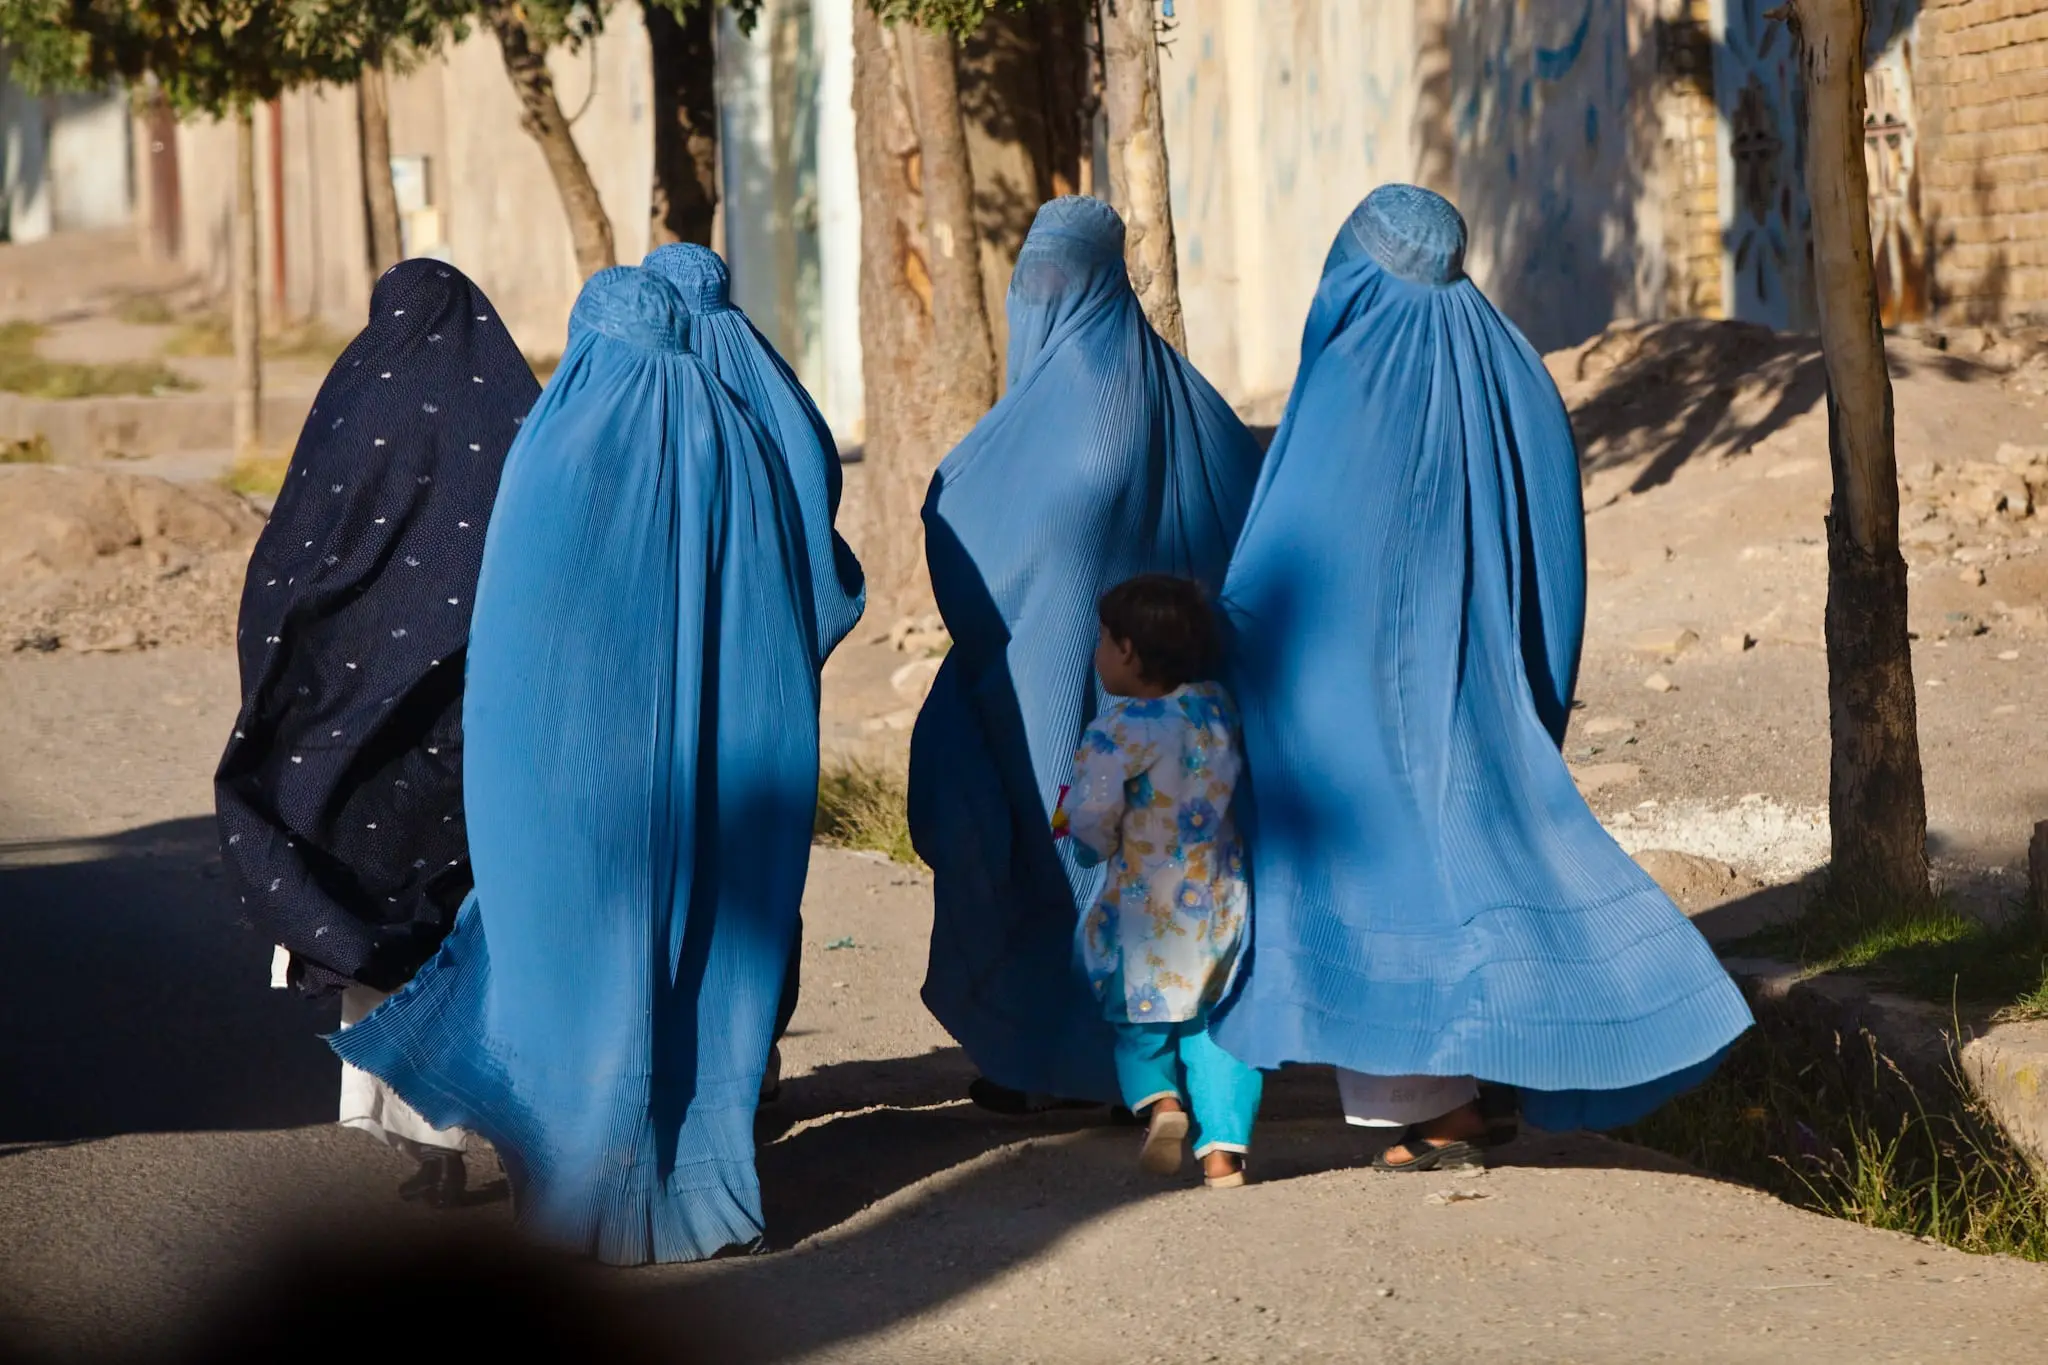 Le donne afghane nel mirino dei talebani